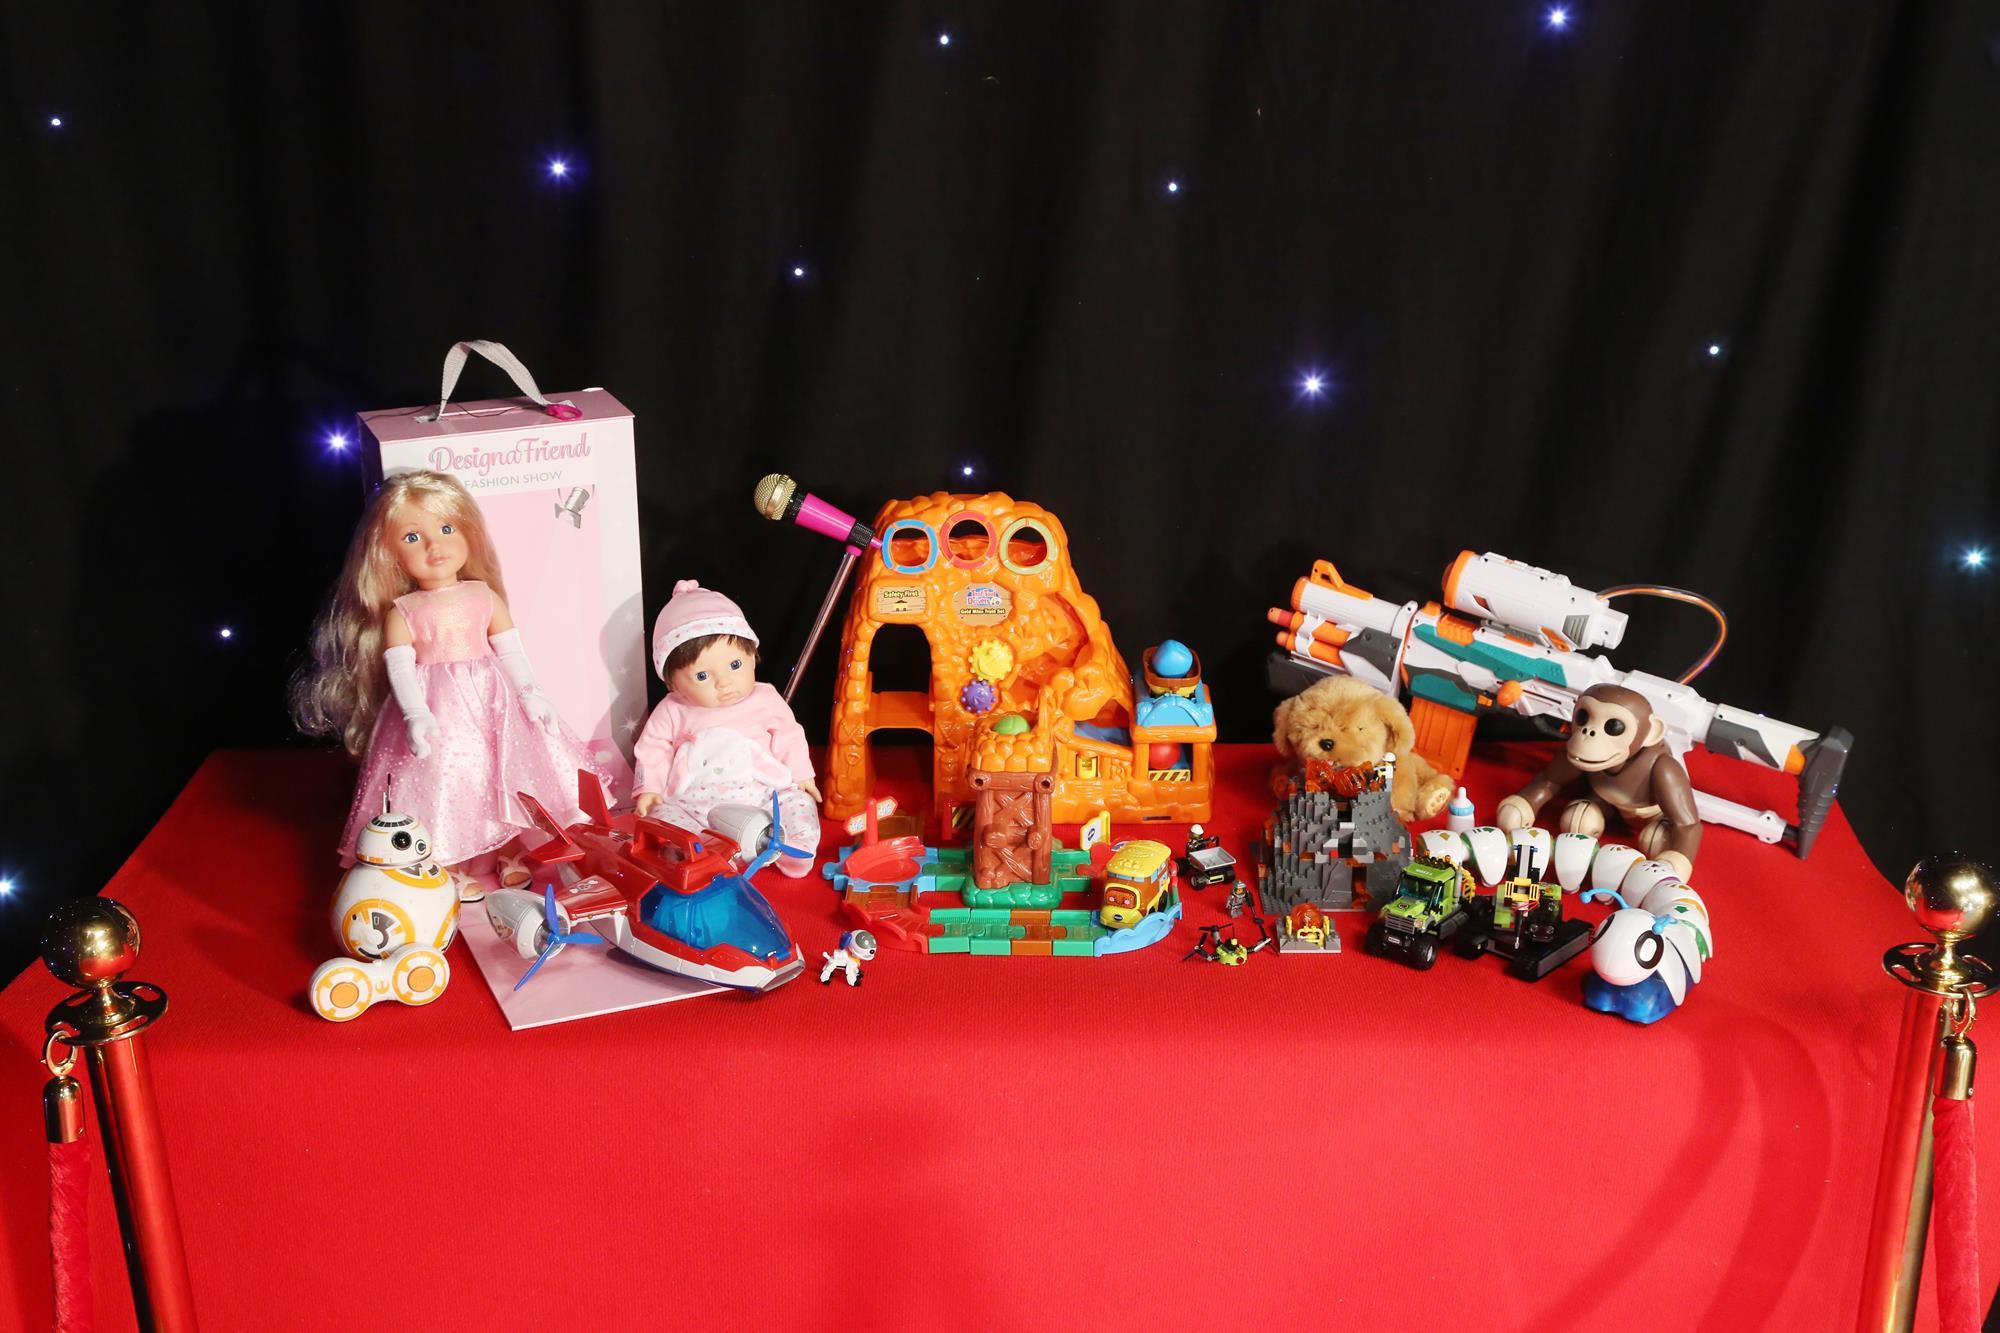 In pictures: Argos unveils its 'top toys' set to dominate Christmas -  Retail Gazette